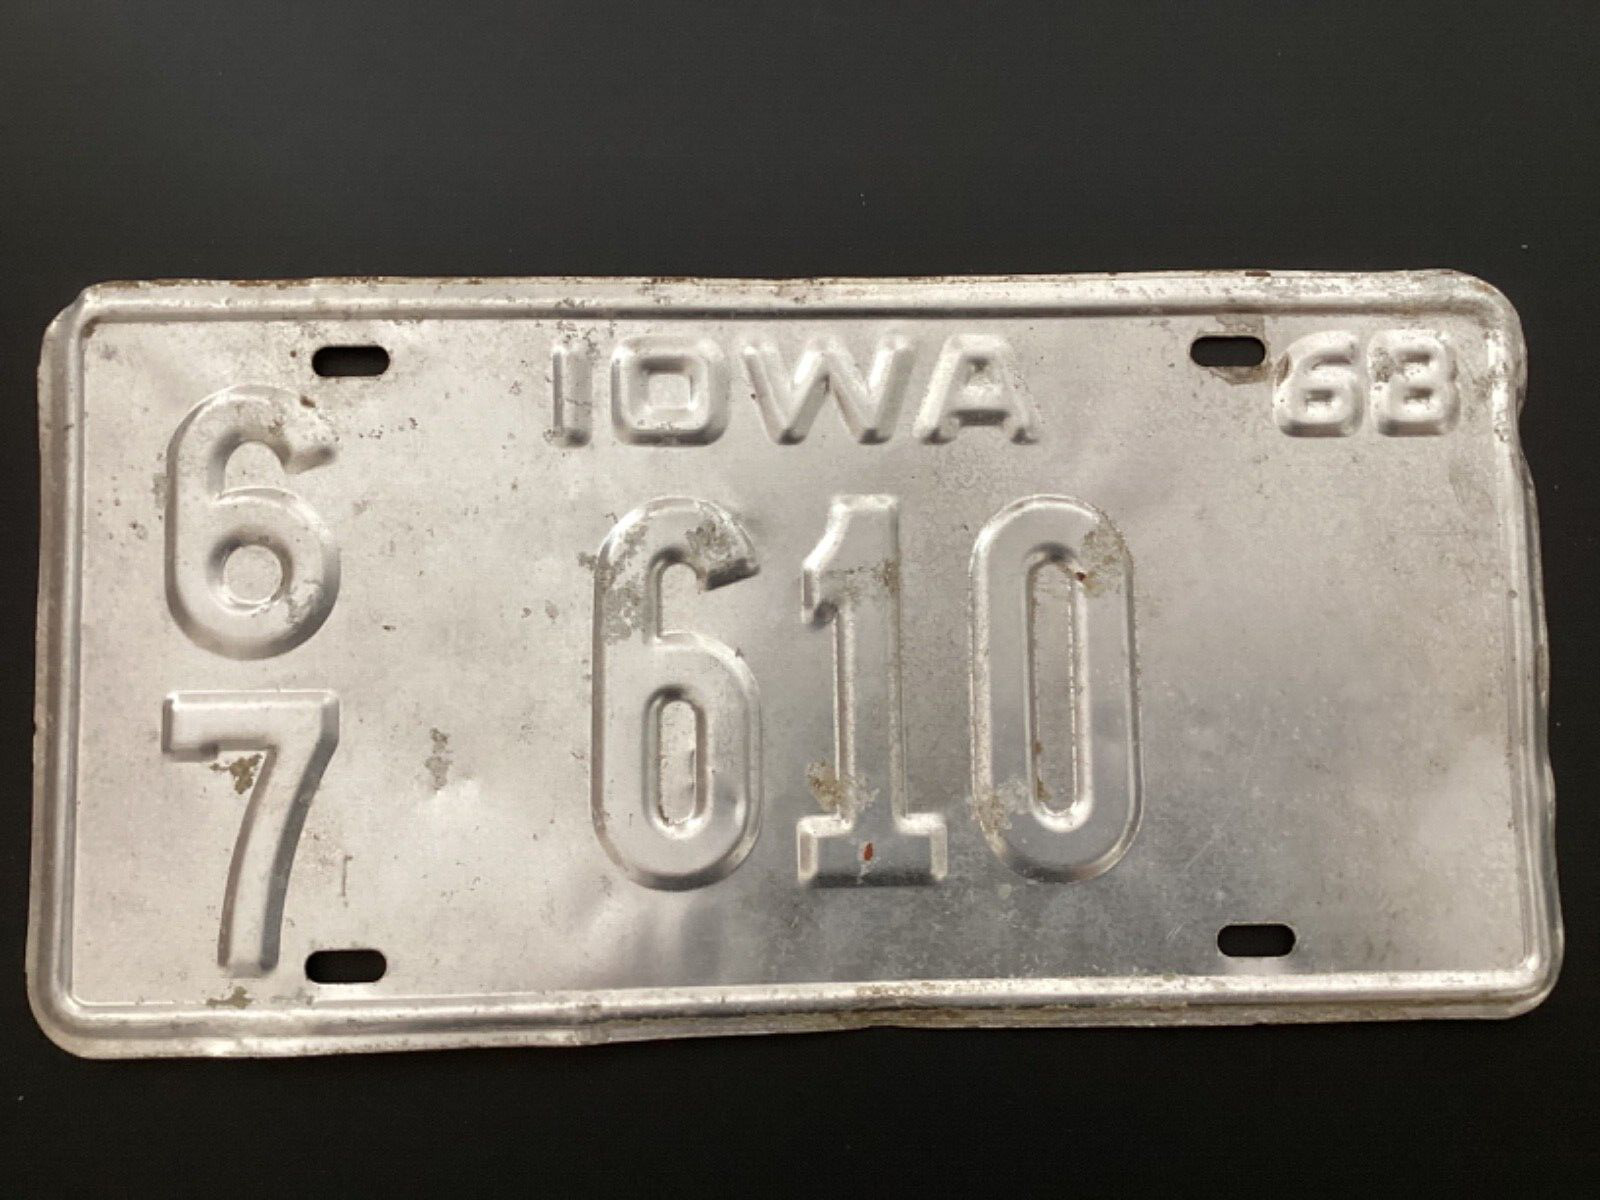 Vintage 1968 Iowa License Plate 67 610 No Piant Left on Tag